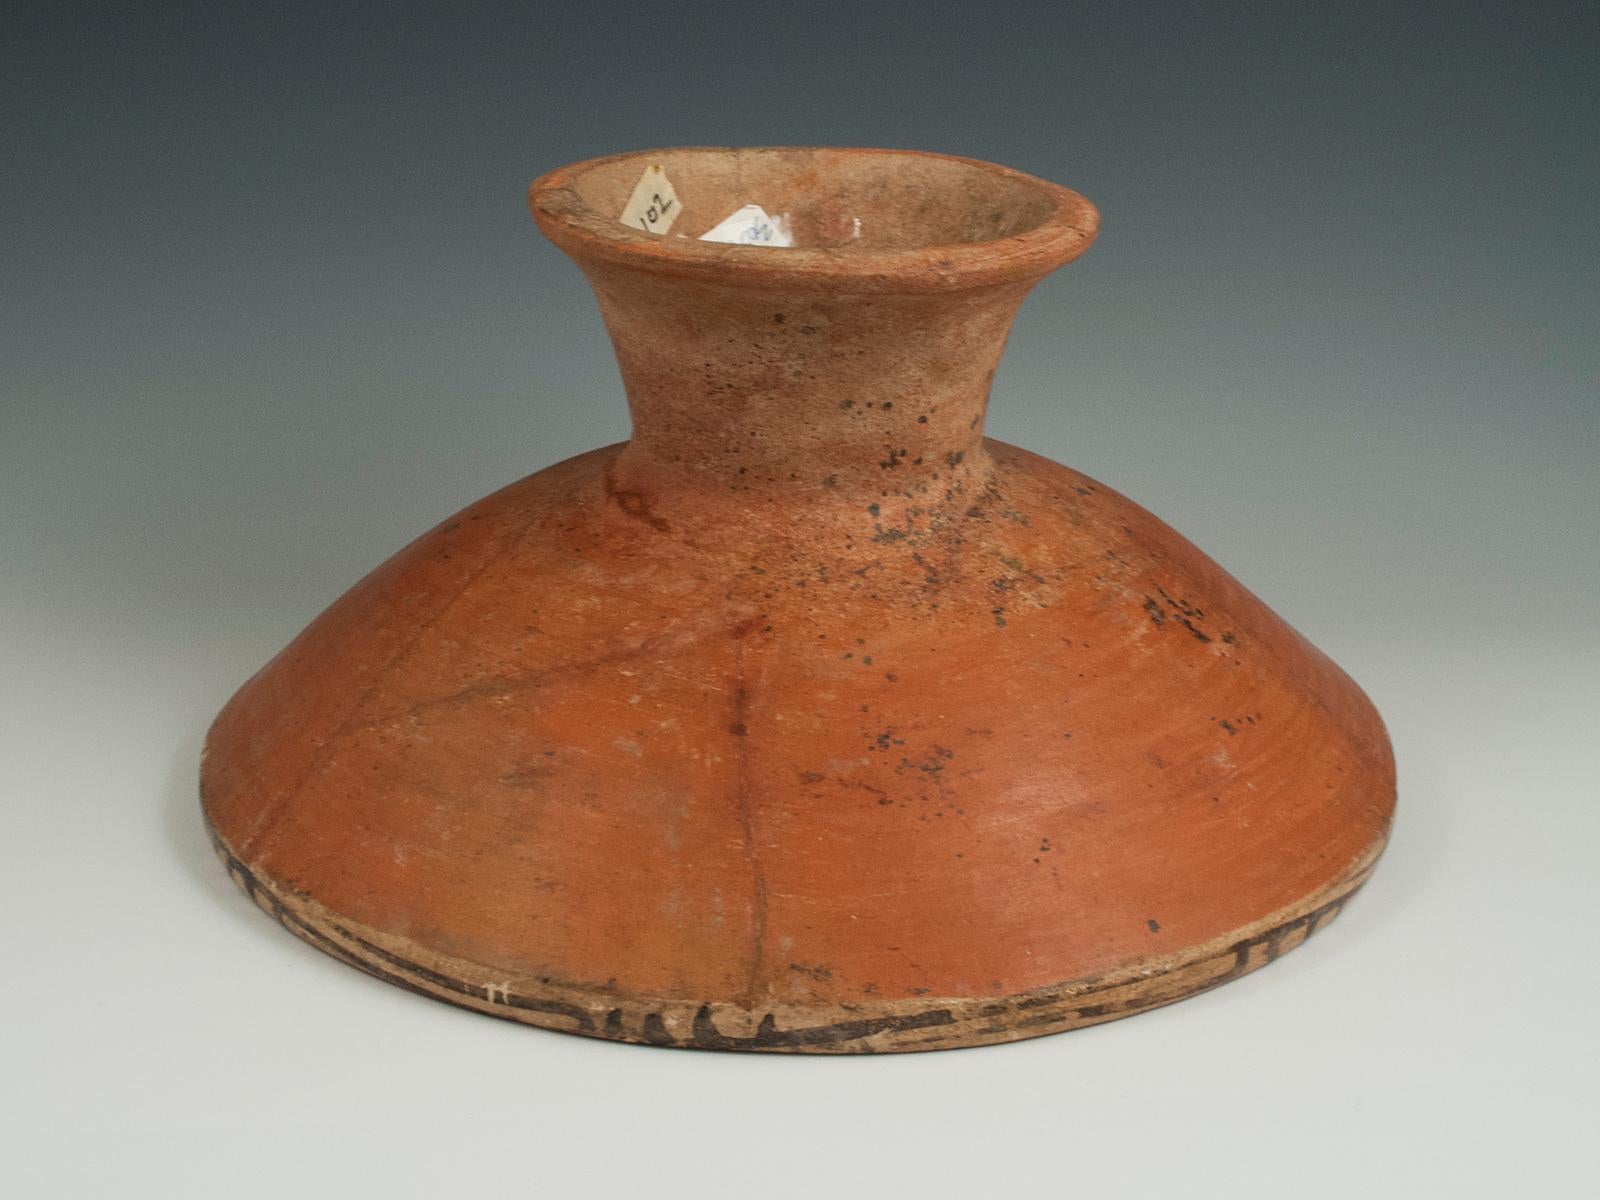  Earthenware Bat Pedestal Dish, Coclé Culture, Panama, 600-800 A.D. In Good Condition For Sale In Point Richmond, CA